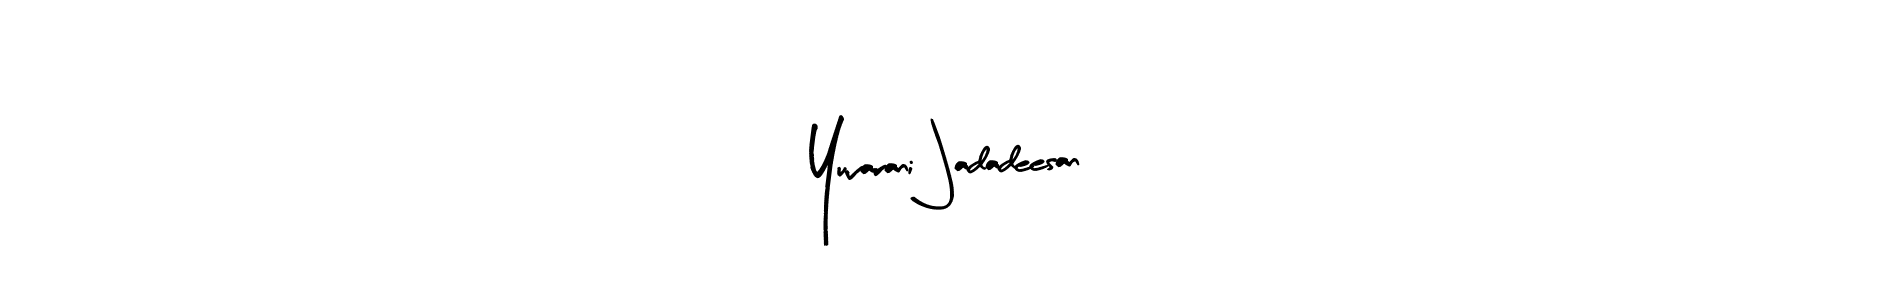 Make a beautiful signature design for name Yuvarani Jadadeesan. Use this online signature maker to create a handwritten signature for free. Yuvarani Jadadeesan signature style 8 images and pictures png